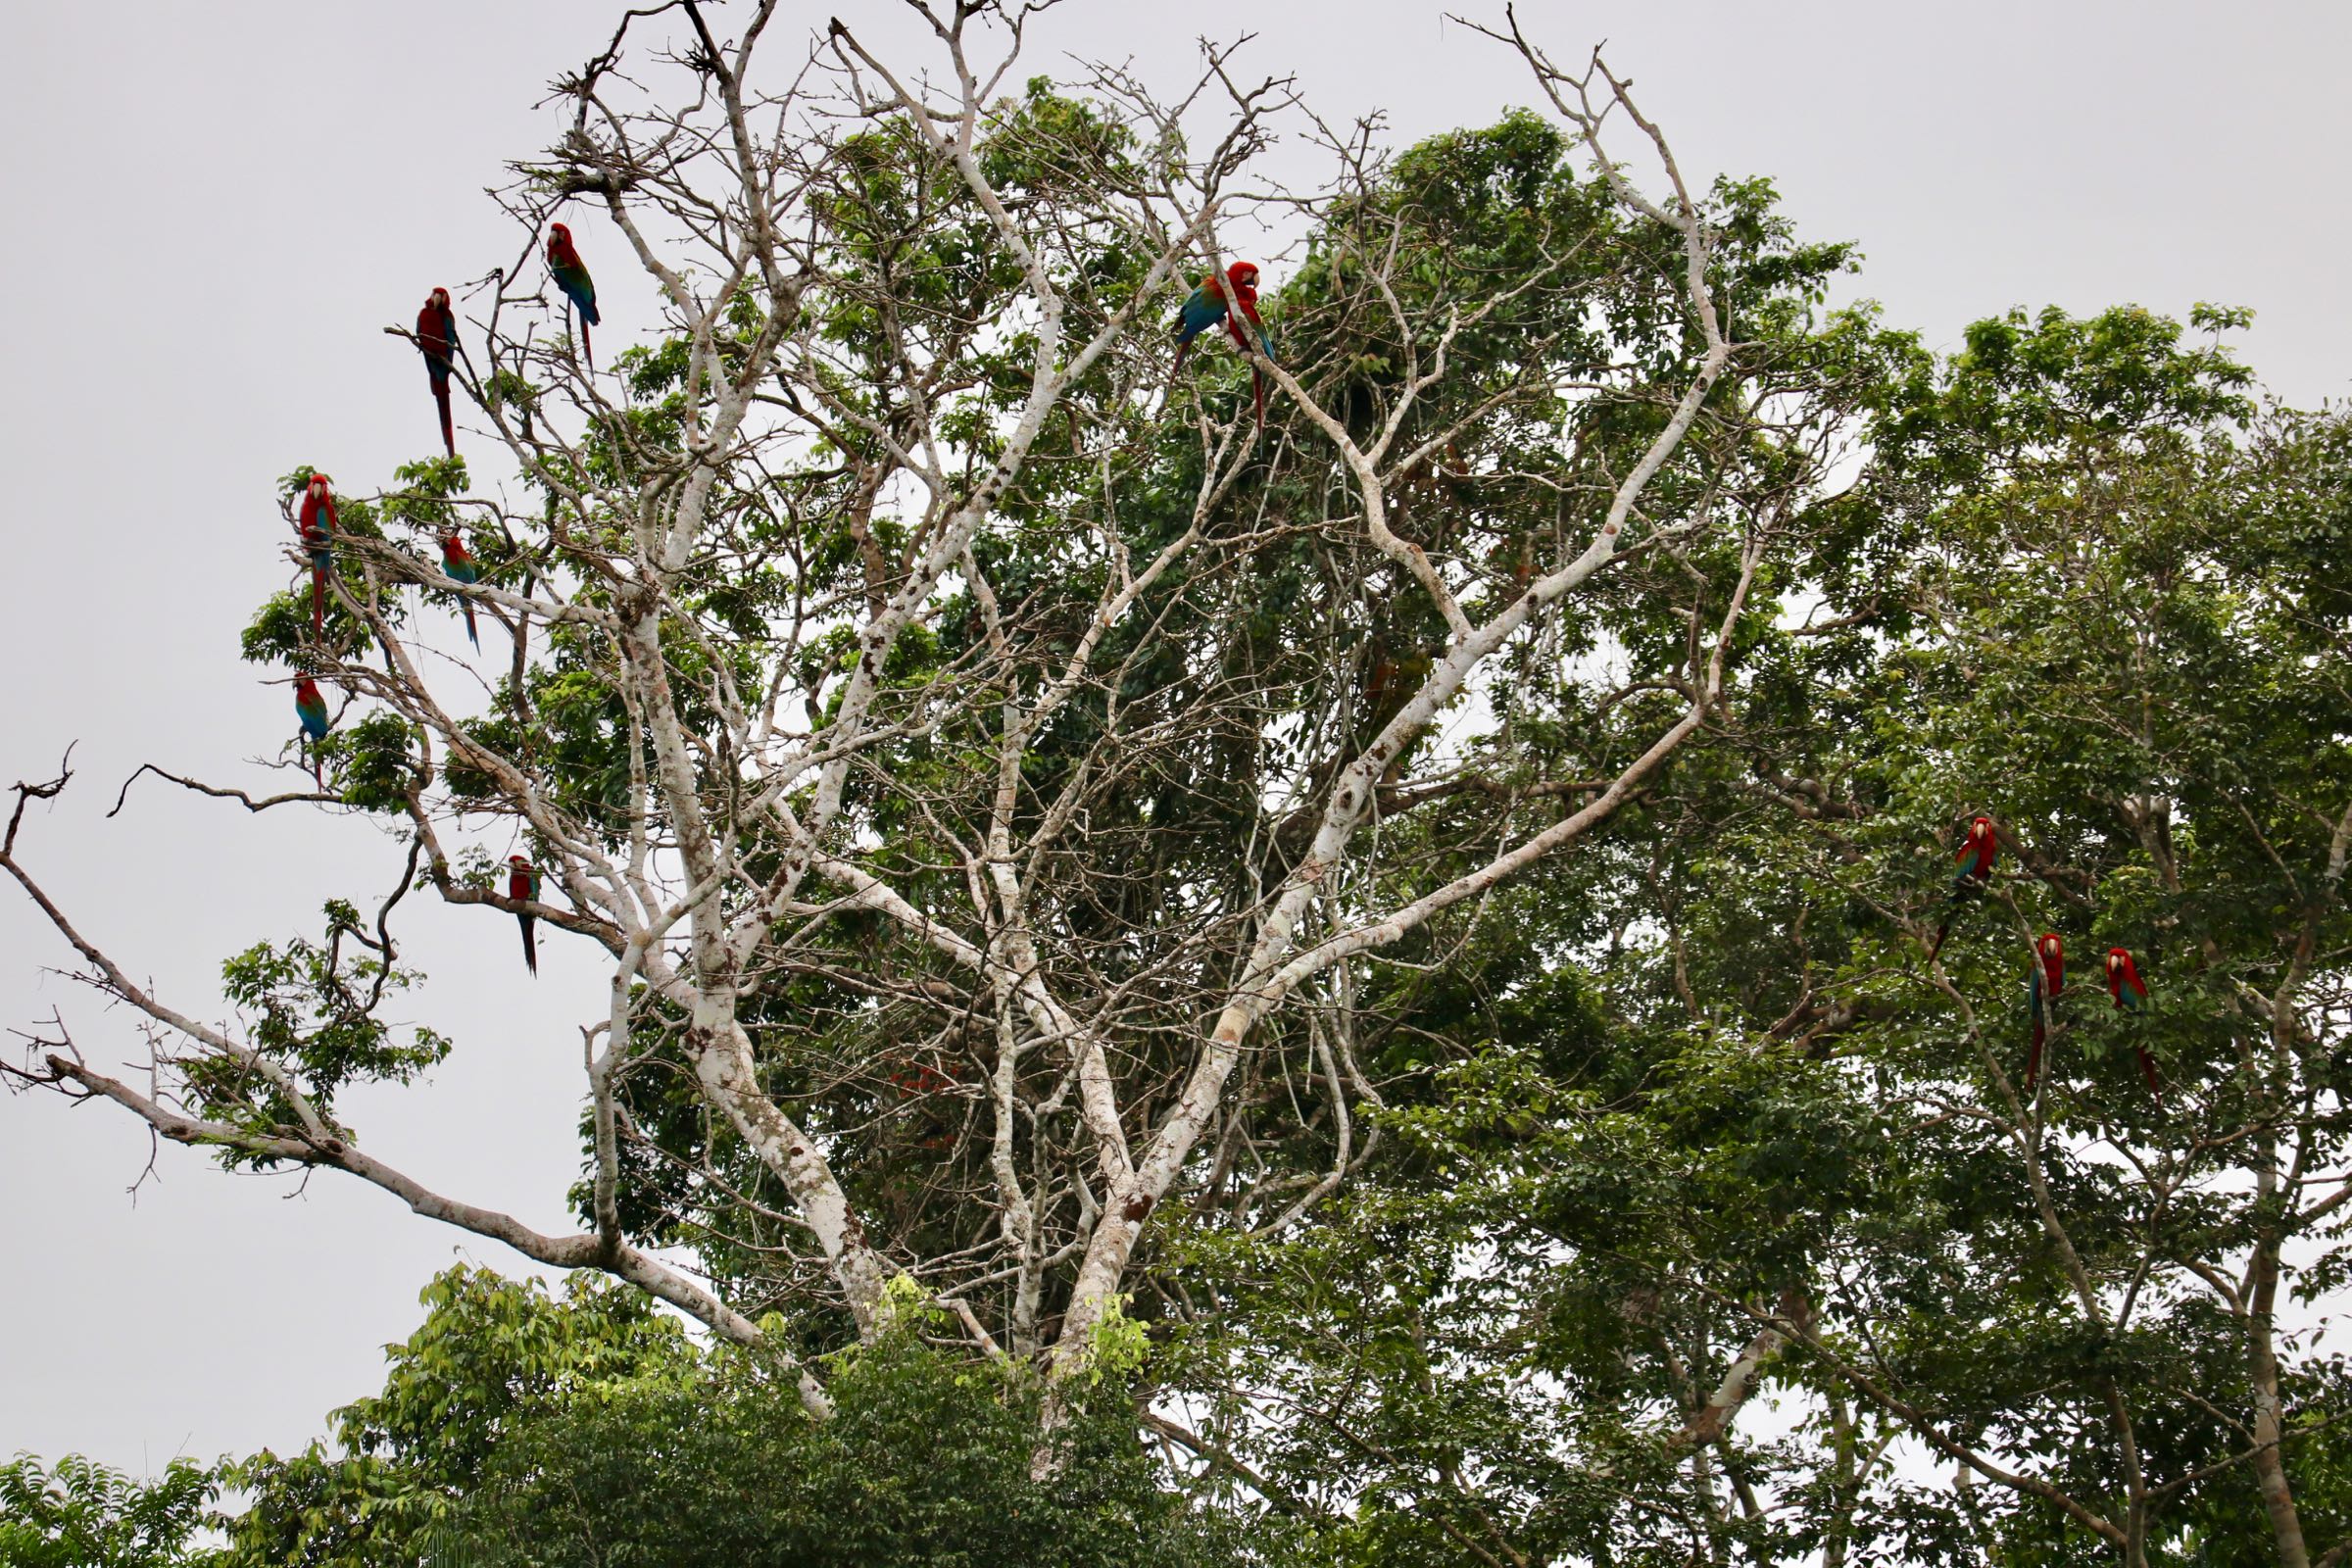 Grünflügelaras, Reserva Nacional Tambopata, Peru